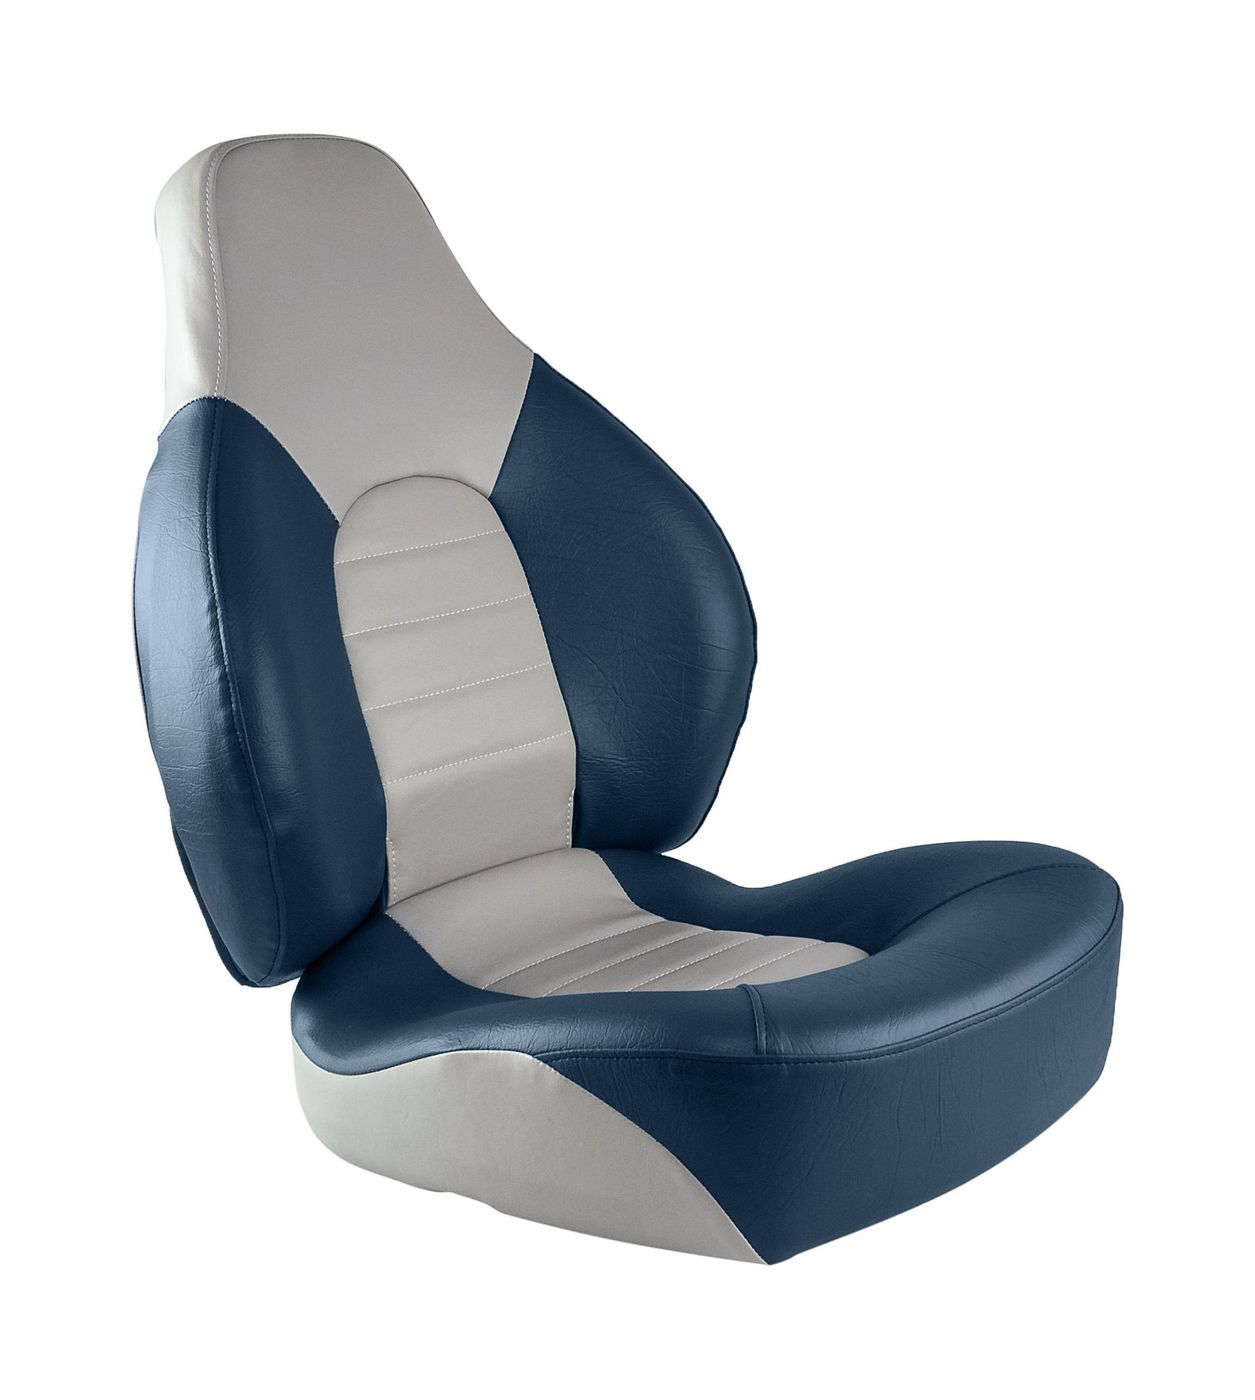 Кресло складное мягкое FISH PRO, цвет серый/синий 1041631 кресло мягкое складное высокая спинка обивка винил синий marine rocket 75127b mr